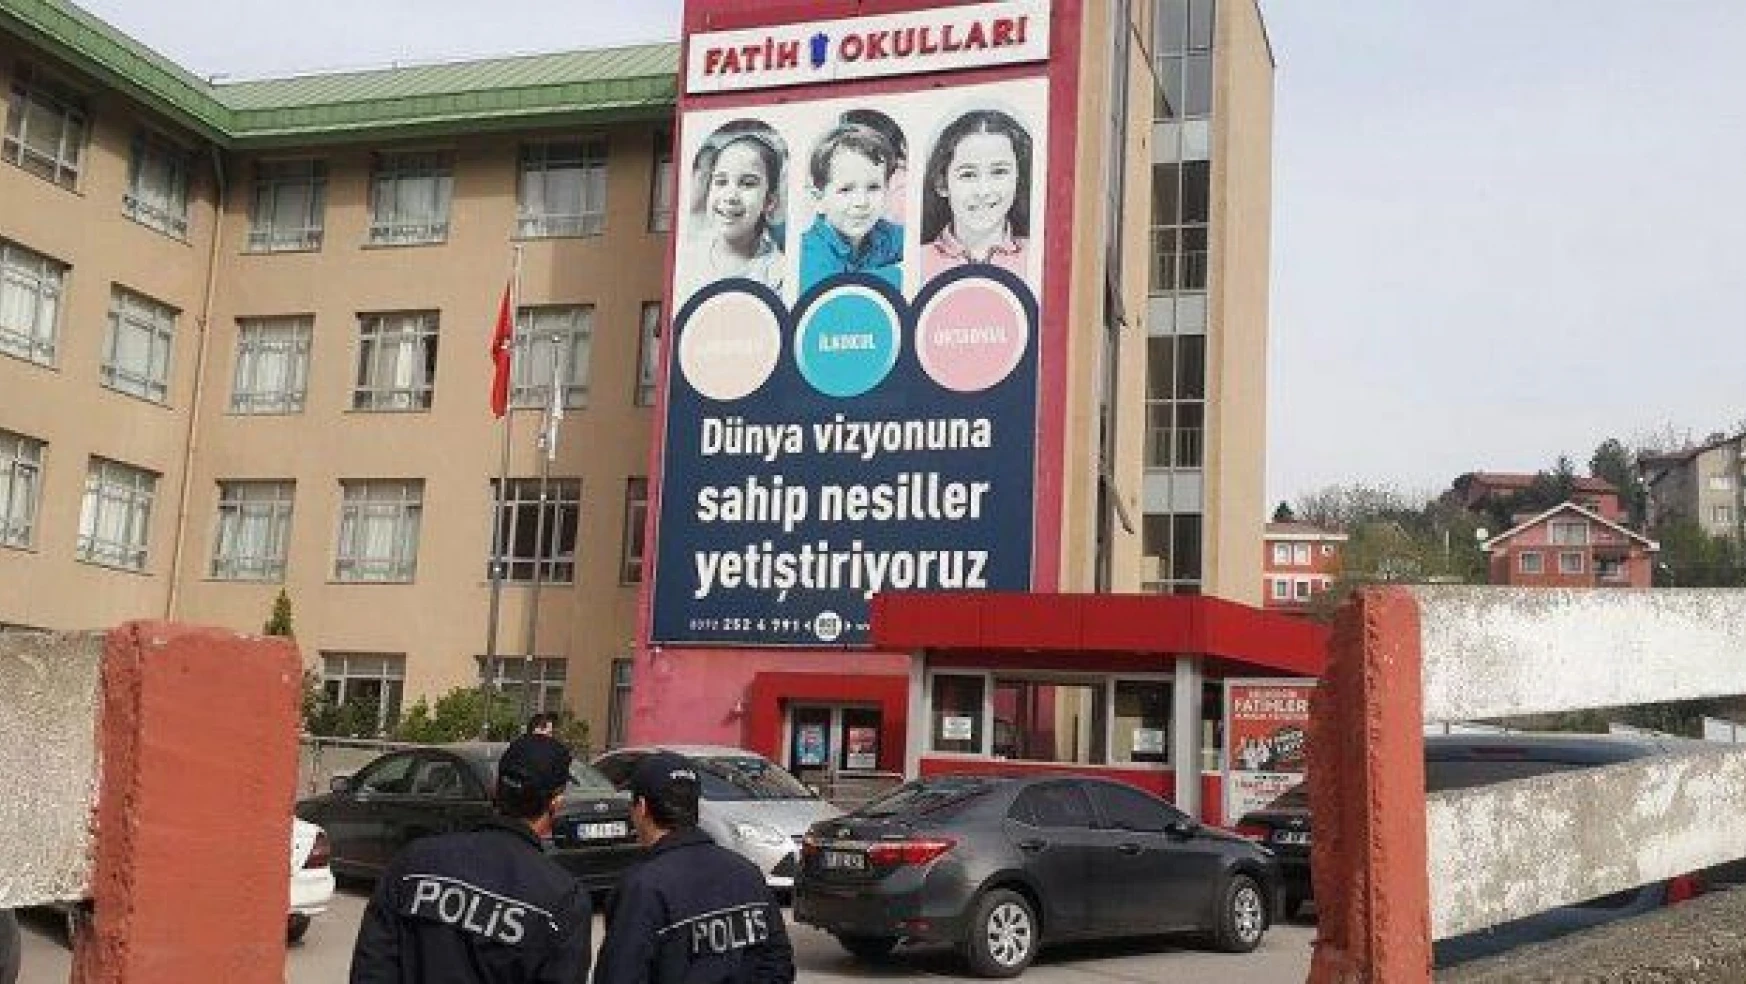 Zonguldak'ta FETÖ/PDY'nin 11 şirketine kayyum atandı